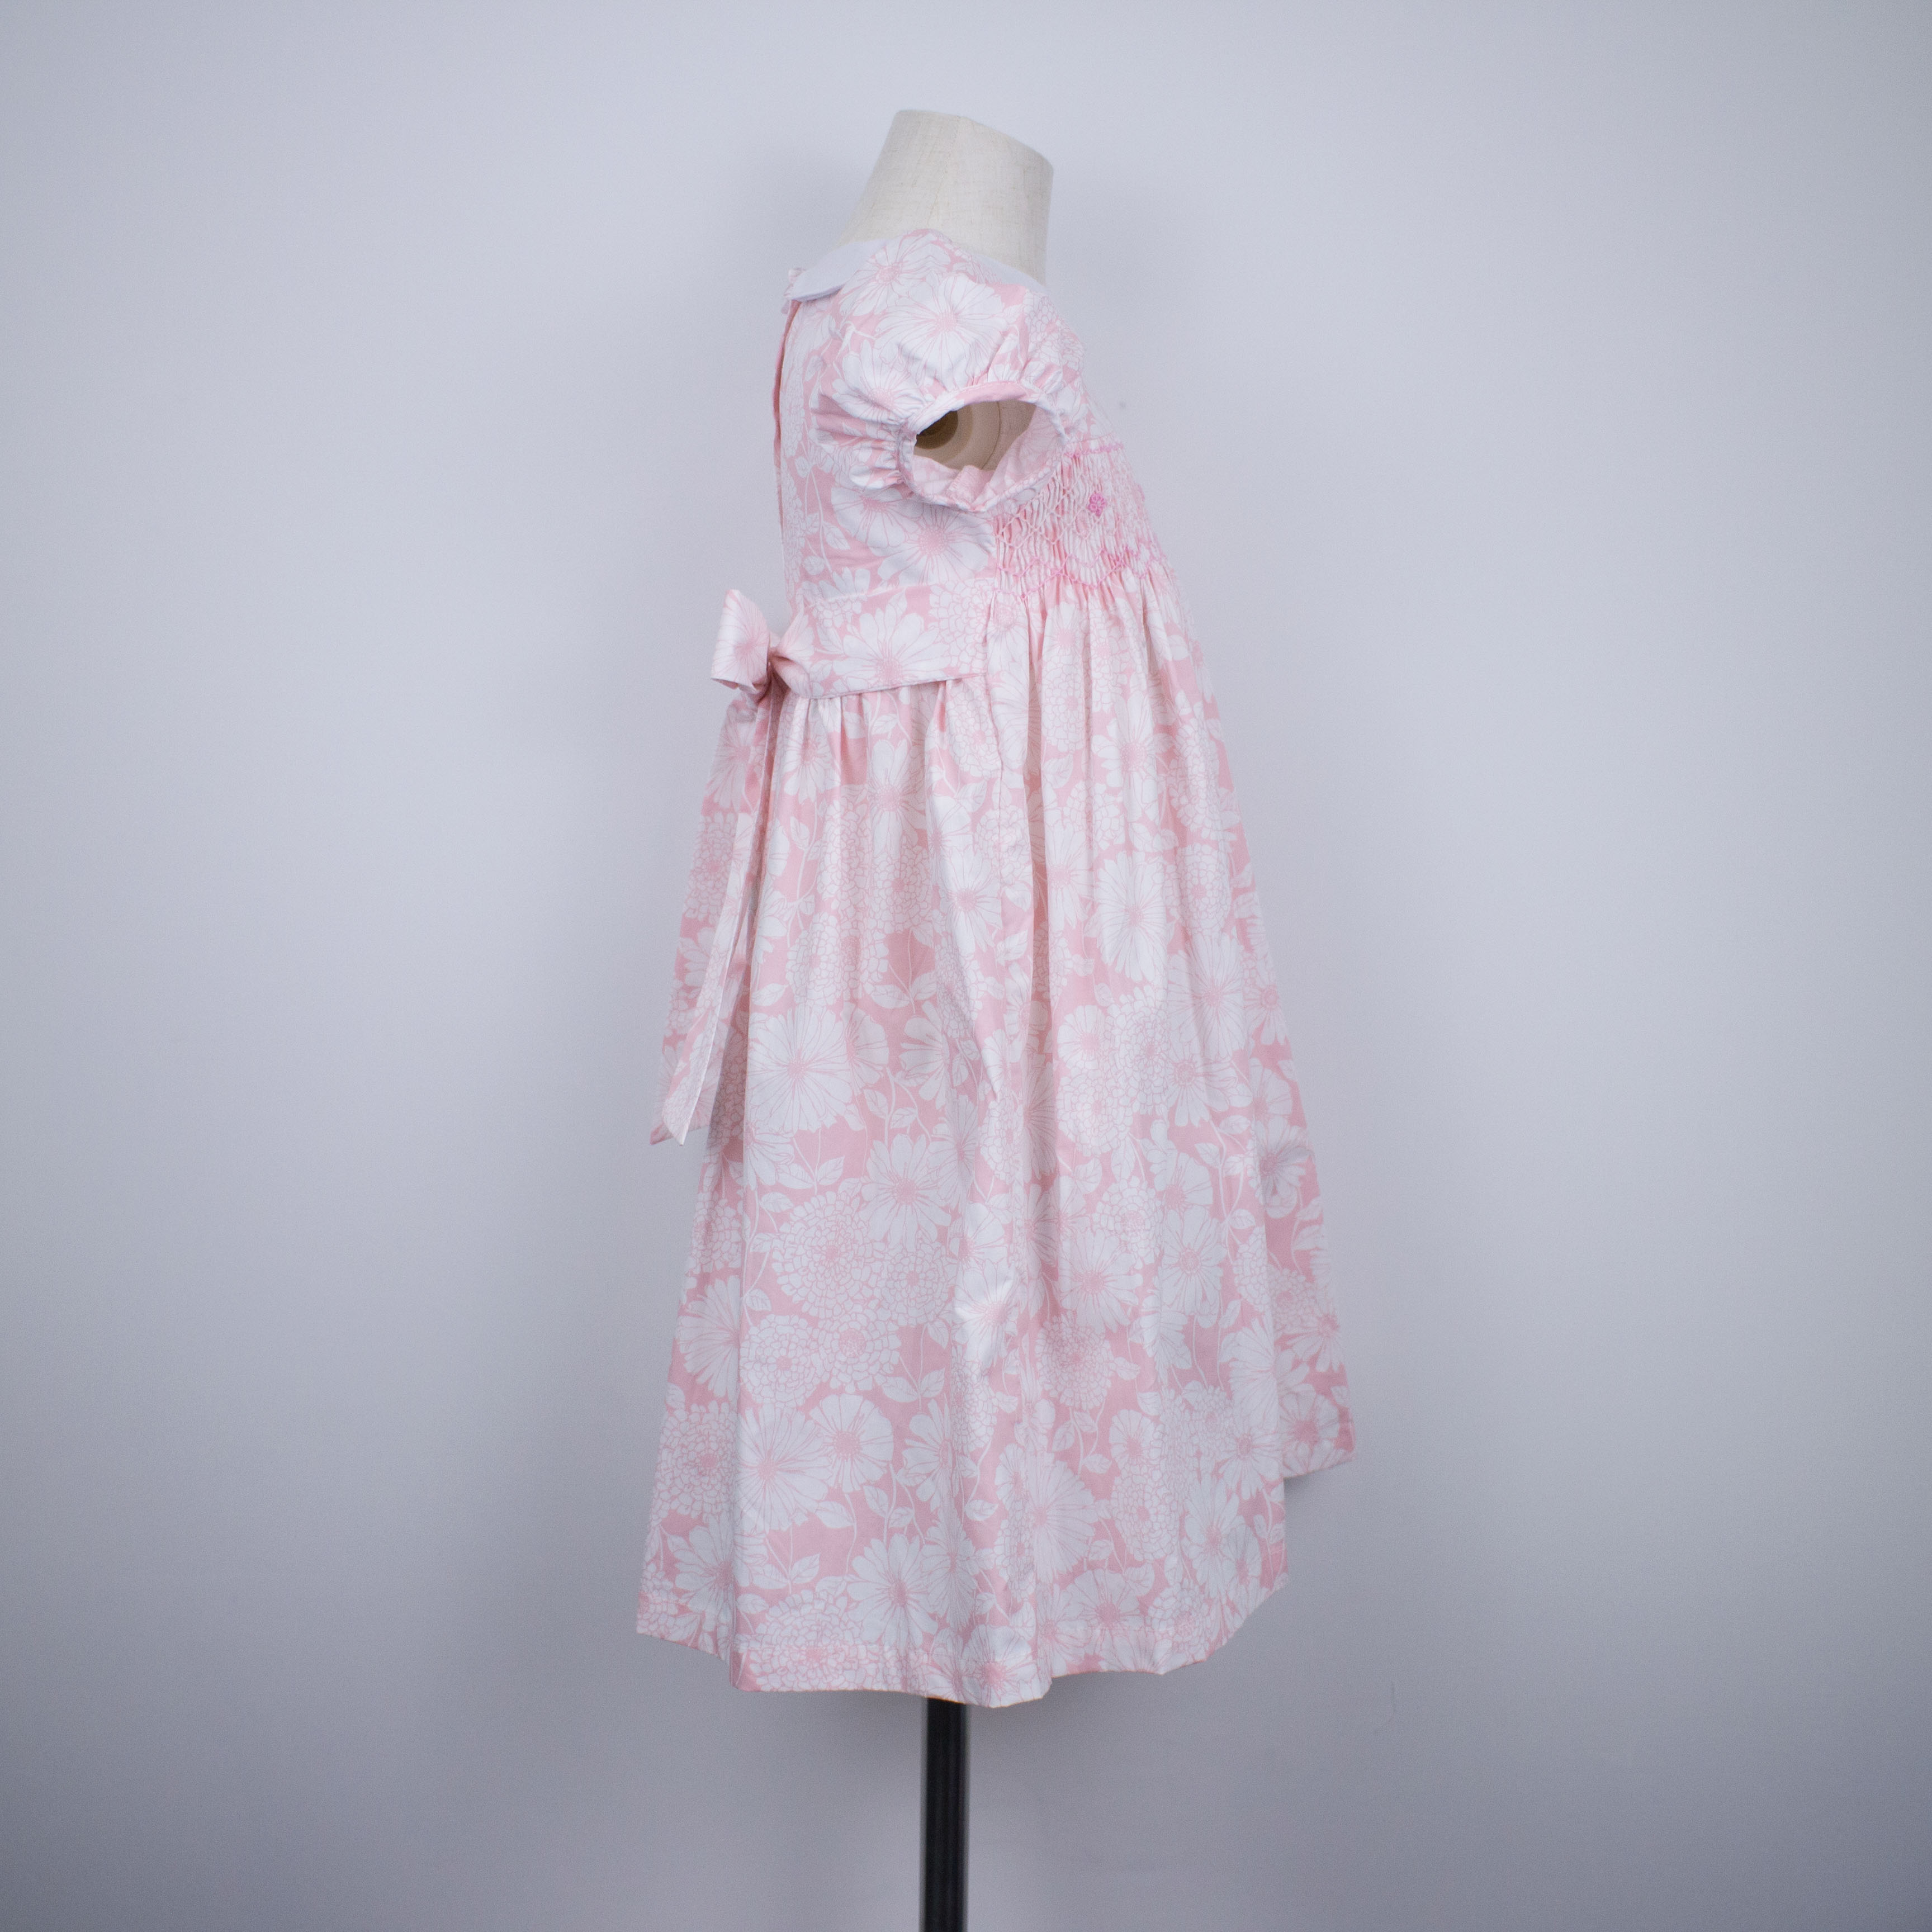 smock kids dress 022 pink sun flower round neck short sleeve A-line skirt smocked dresses for girls